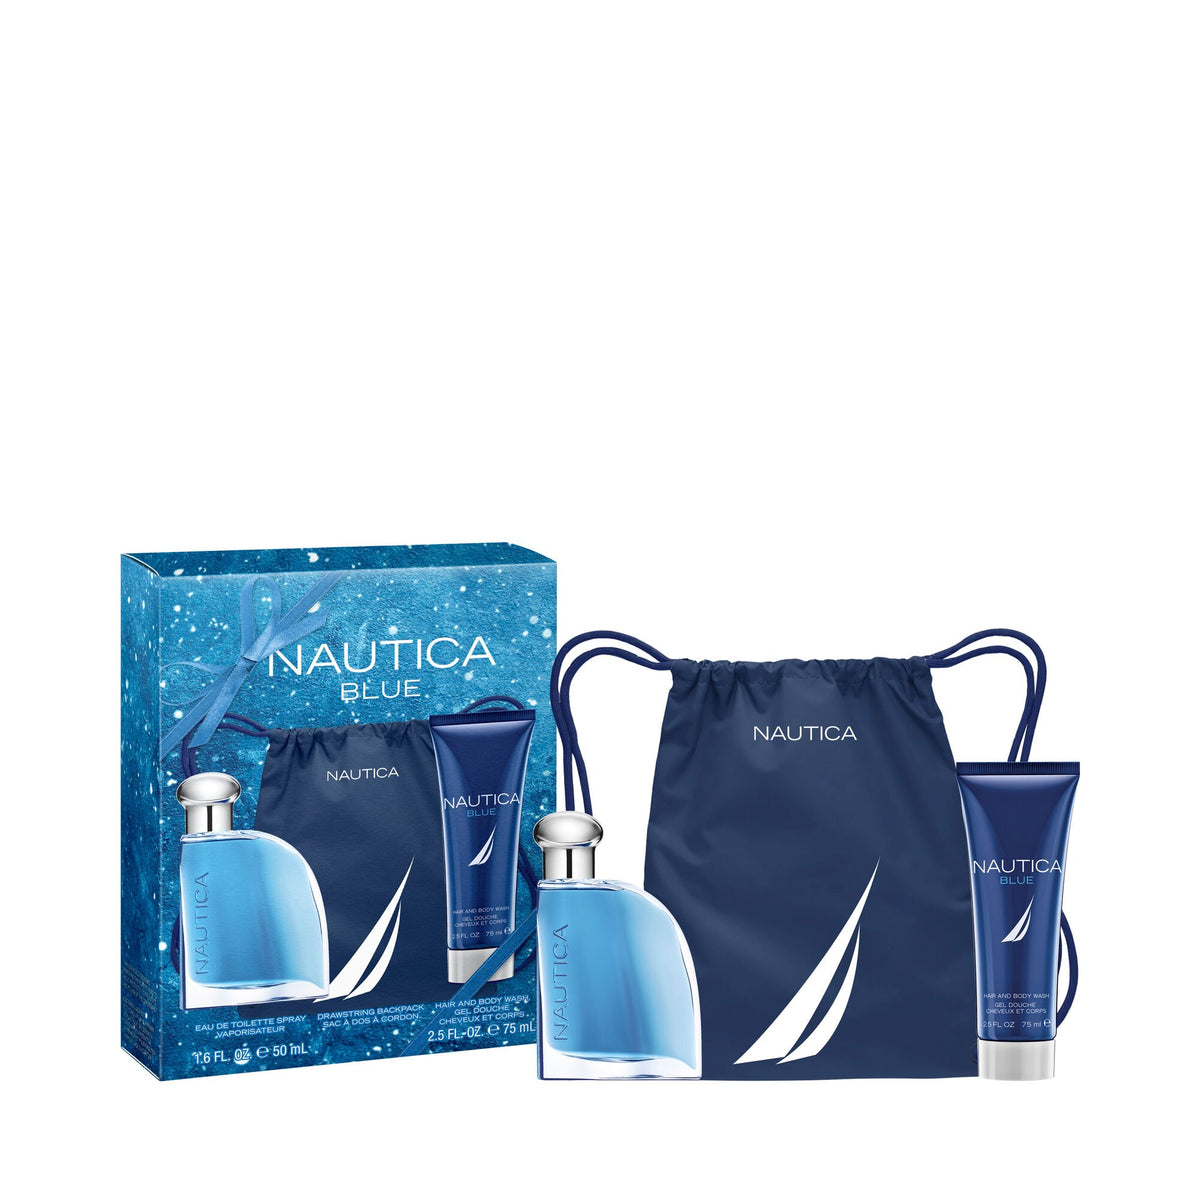 Nautica Men's Nautica Blue Toiletry Bag Fragrance Gift Set Multi